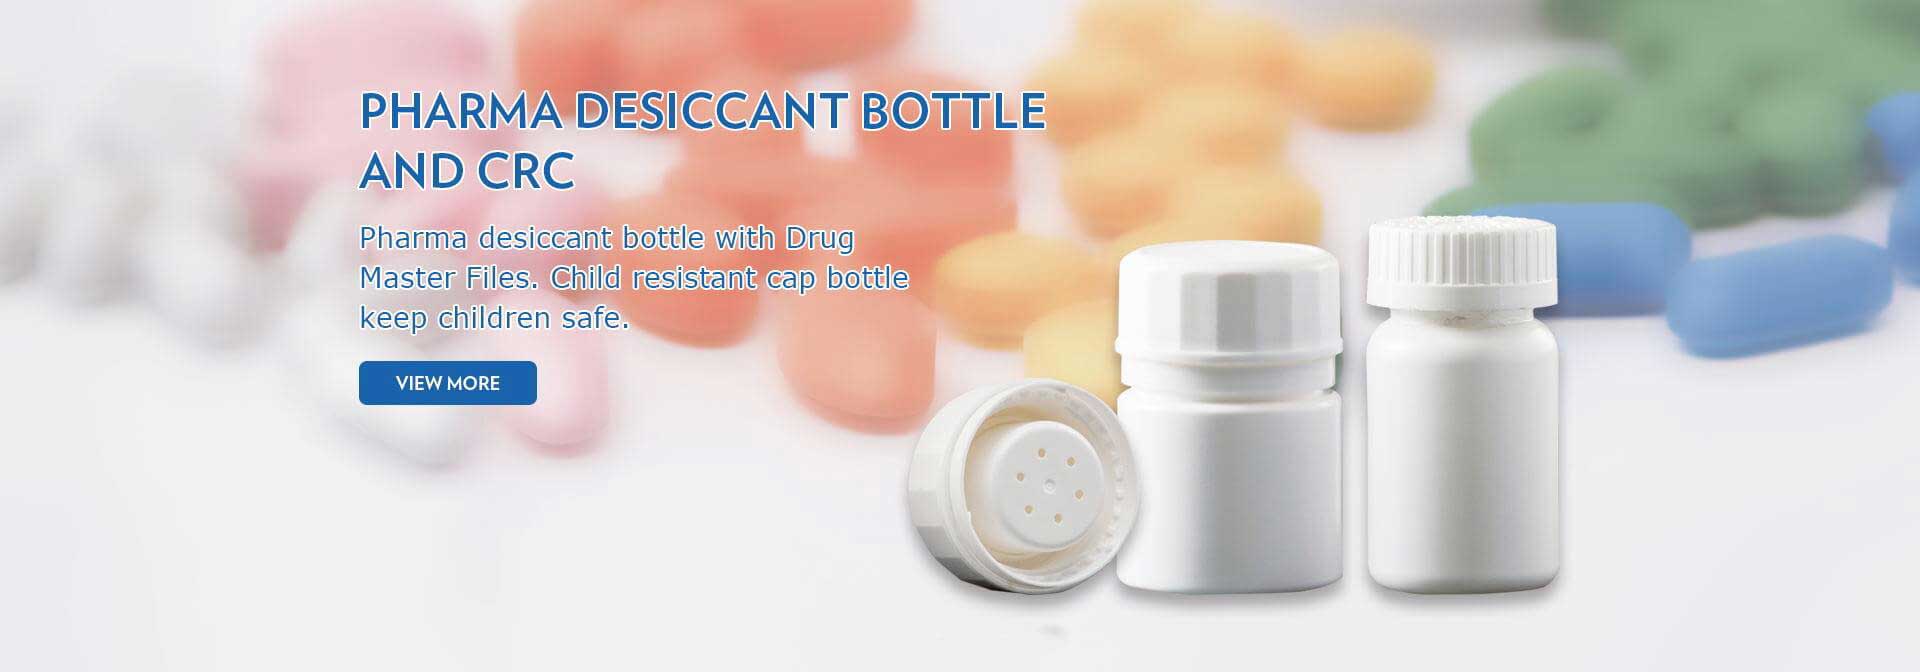 Pharma Desiccant Bottle and CRC